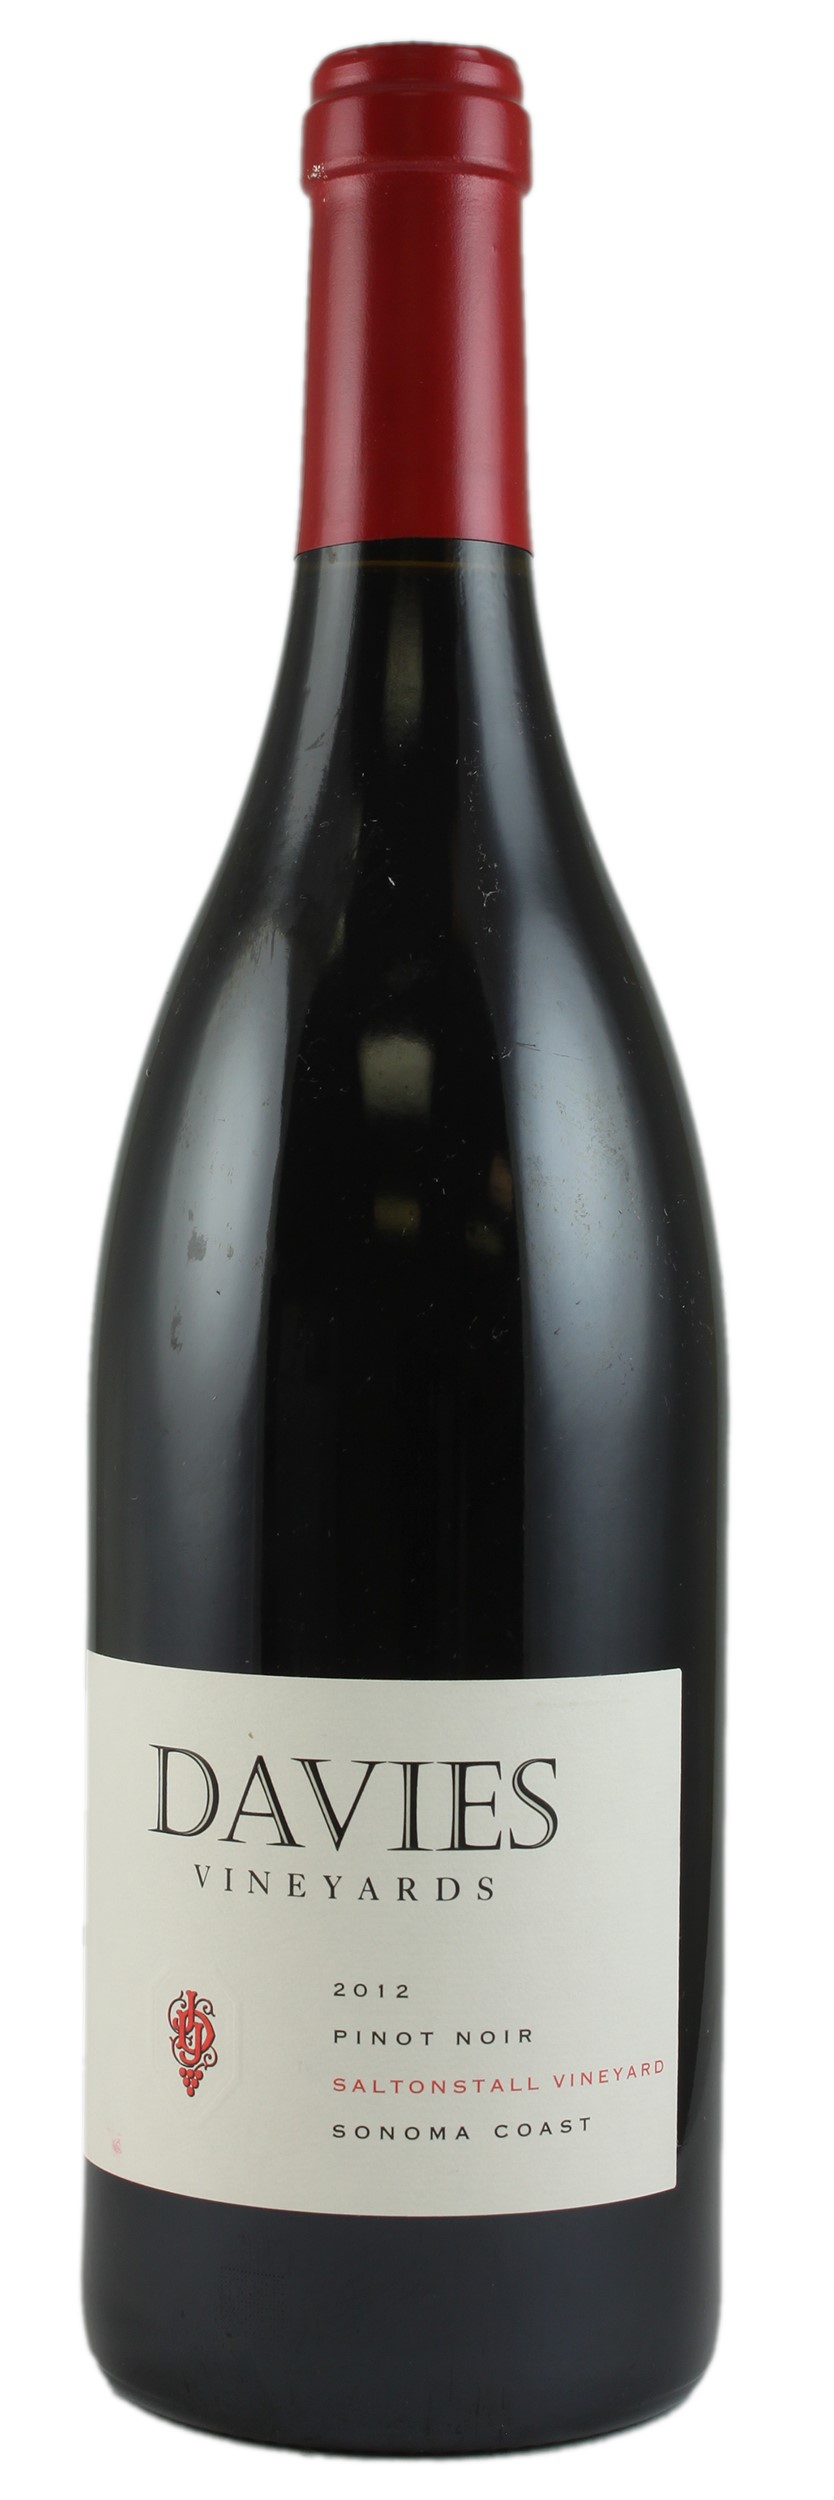 2012 Davies Pinot Noir Saltonstall Vineyard Sonoma Coast - click image for full description